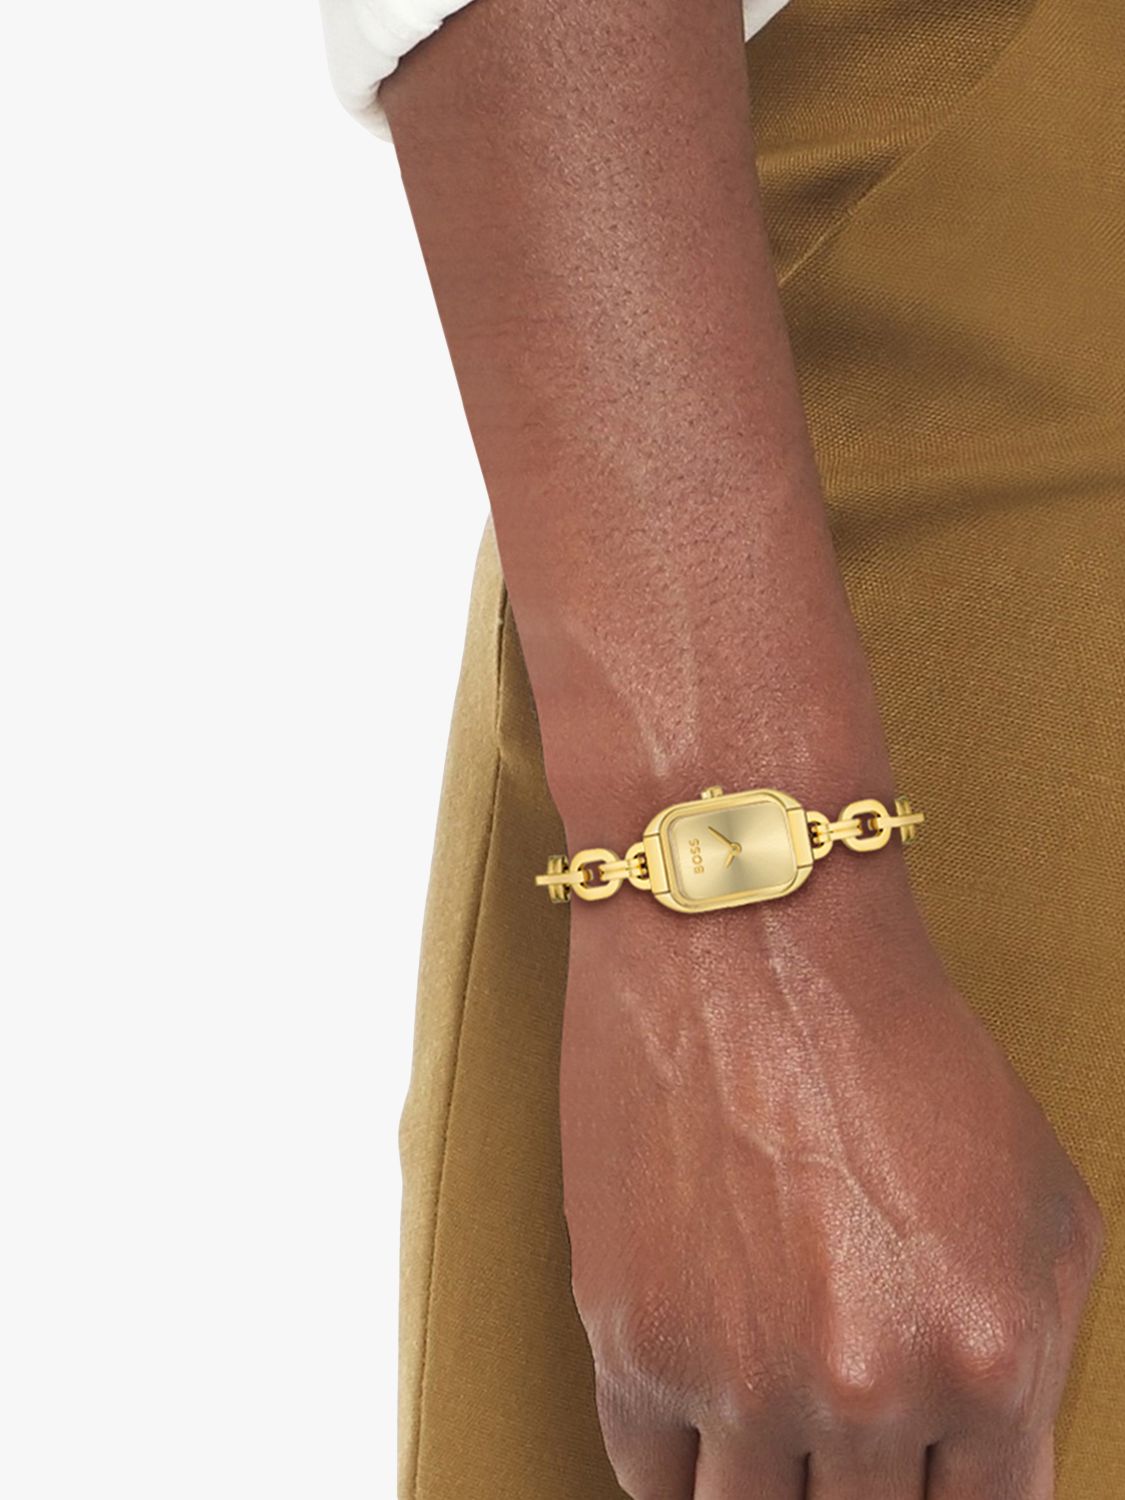 Buy BOSS 1502655 Women's Hailey Bracelet Strap Watch, Gold Online at johnlewis.com